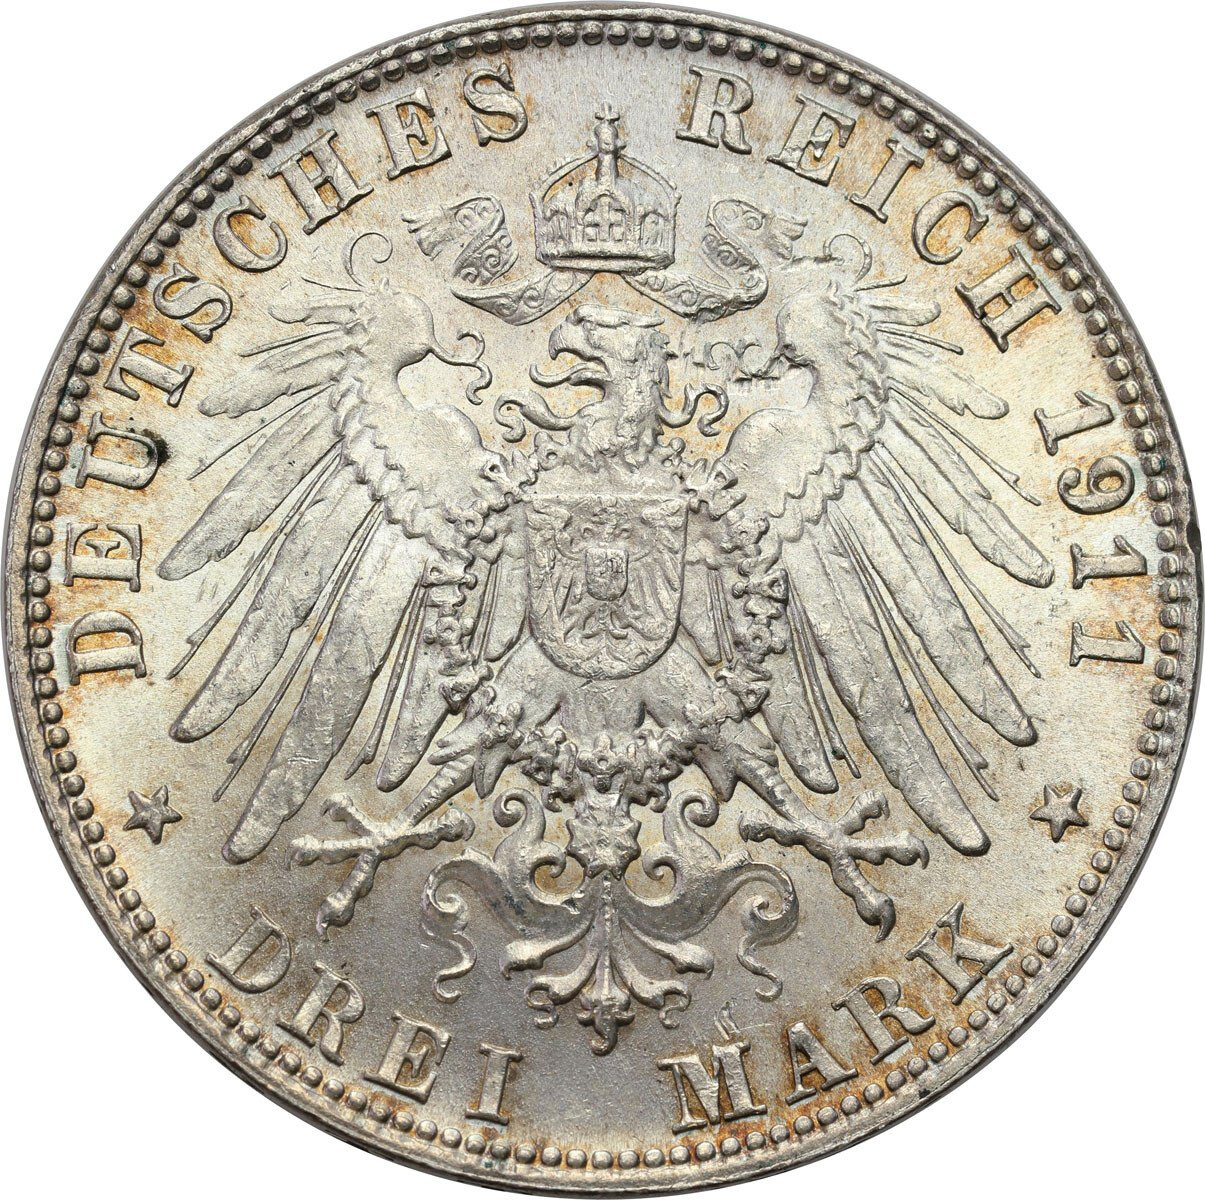 Niemcy, Bawaria. 3 marki 1911 D, Monachium, Luitpold – PIĘKNE